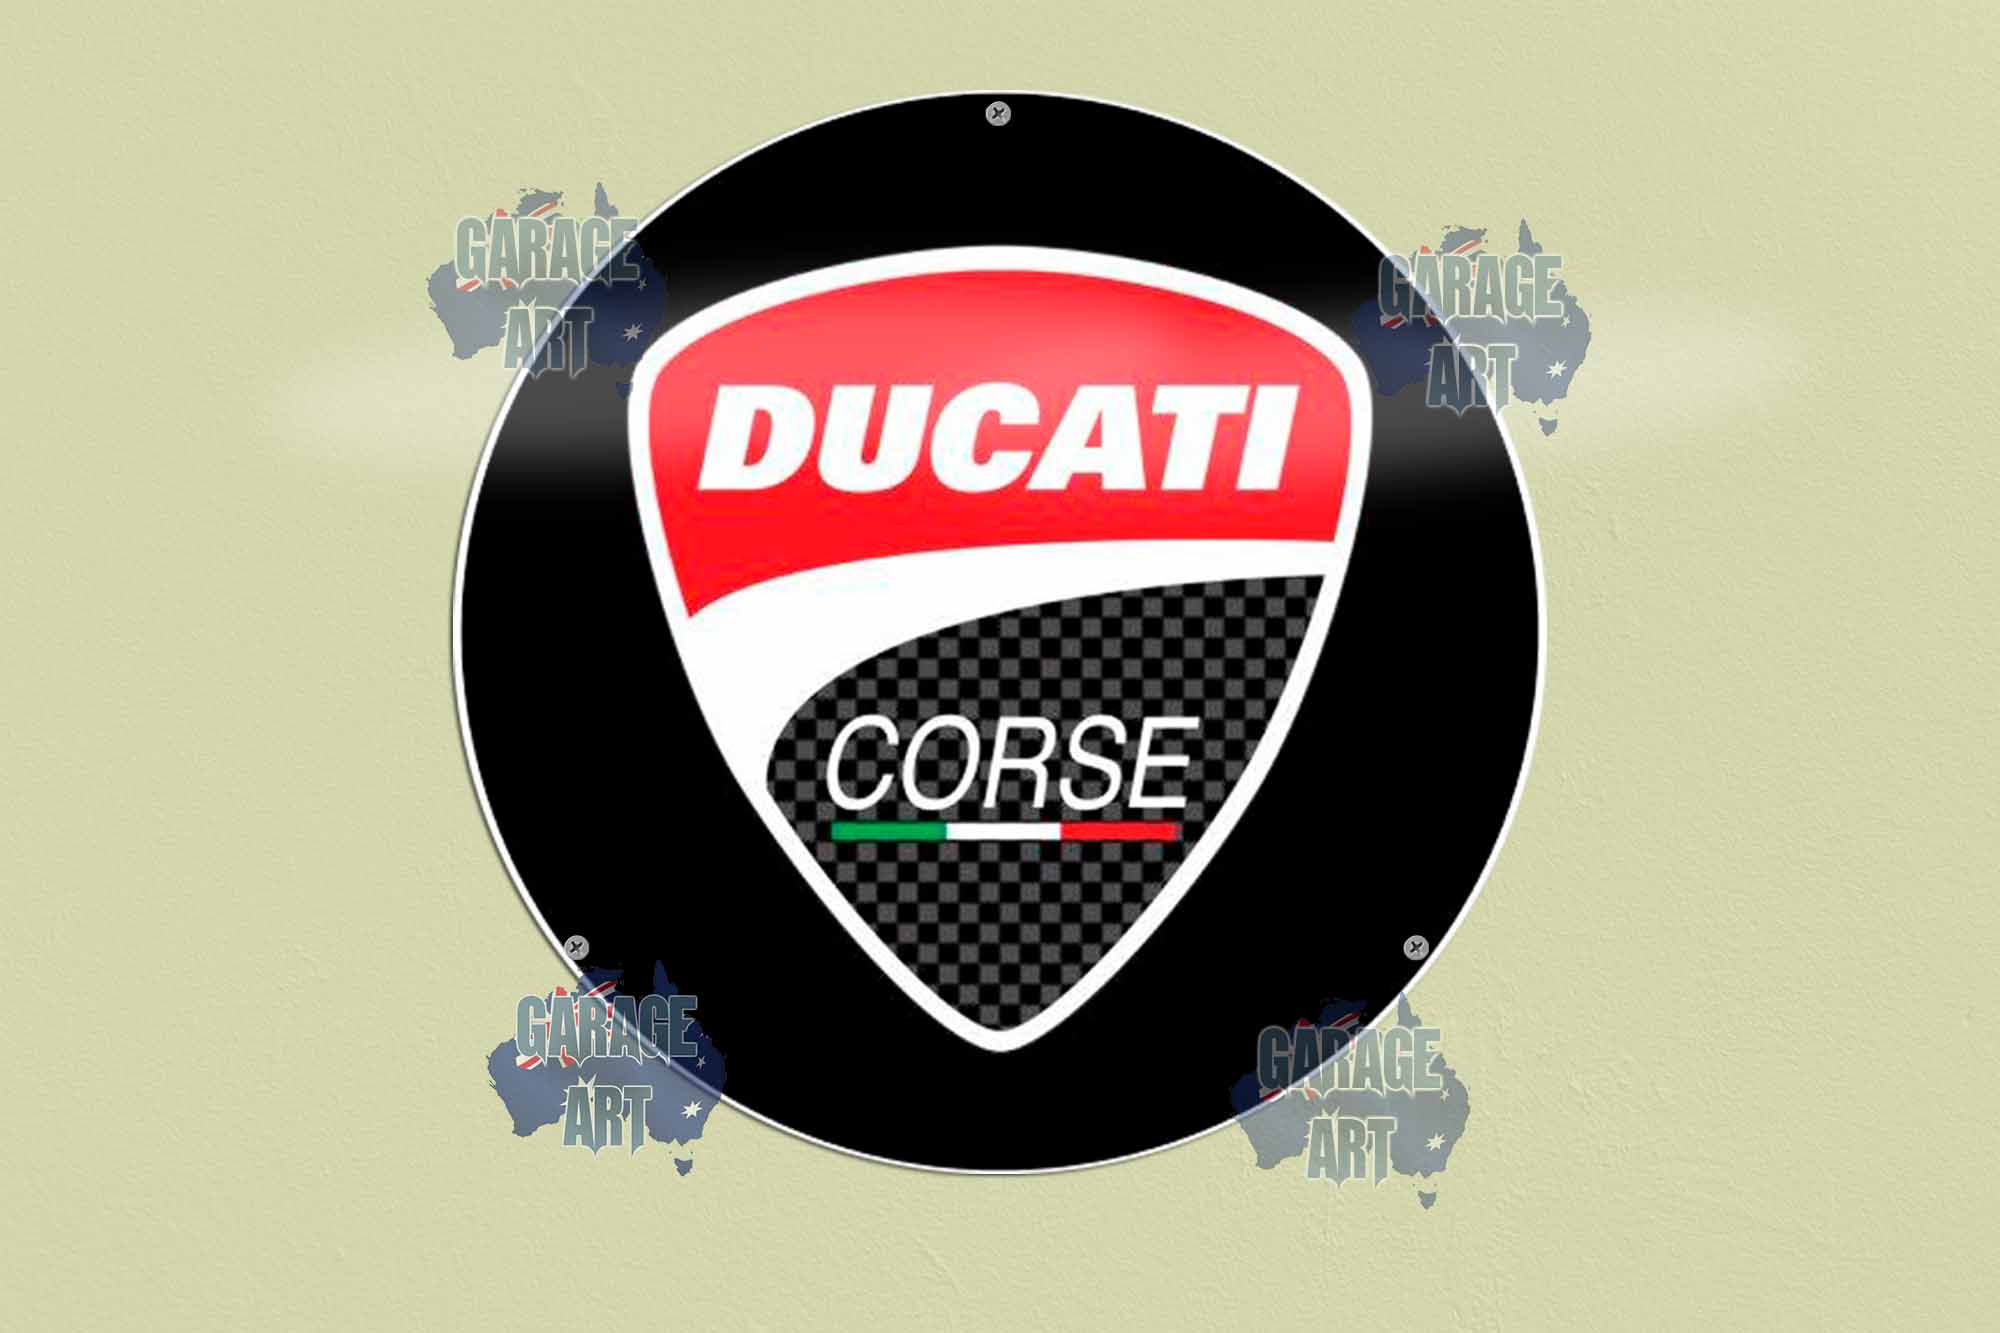 Ducati Logo Motorcycle 355mmDia Tin Sign freeshipping - garageartaustralia